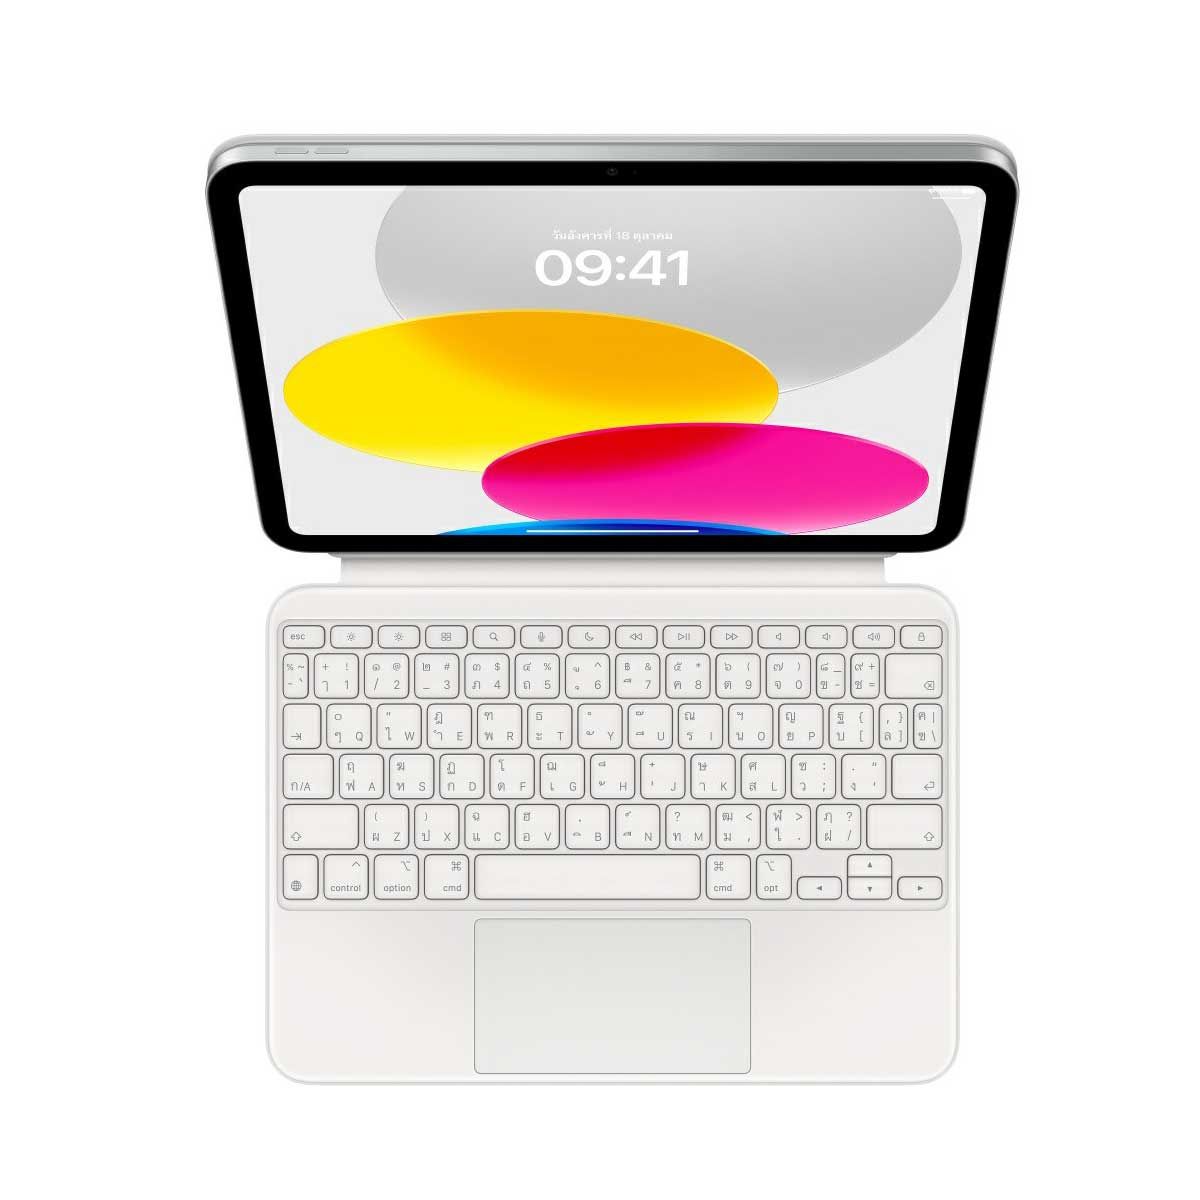 Apple Magic Keyboard Folio for iPad (10th gen)